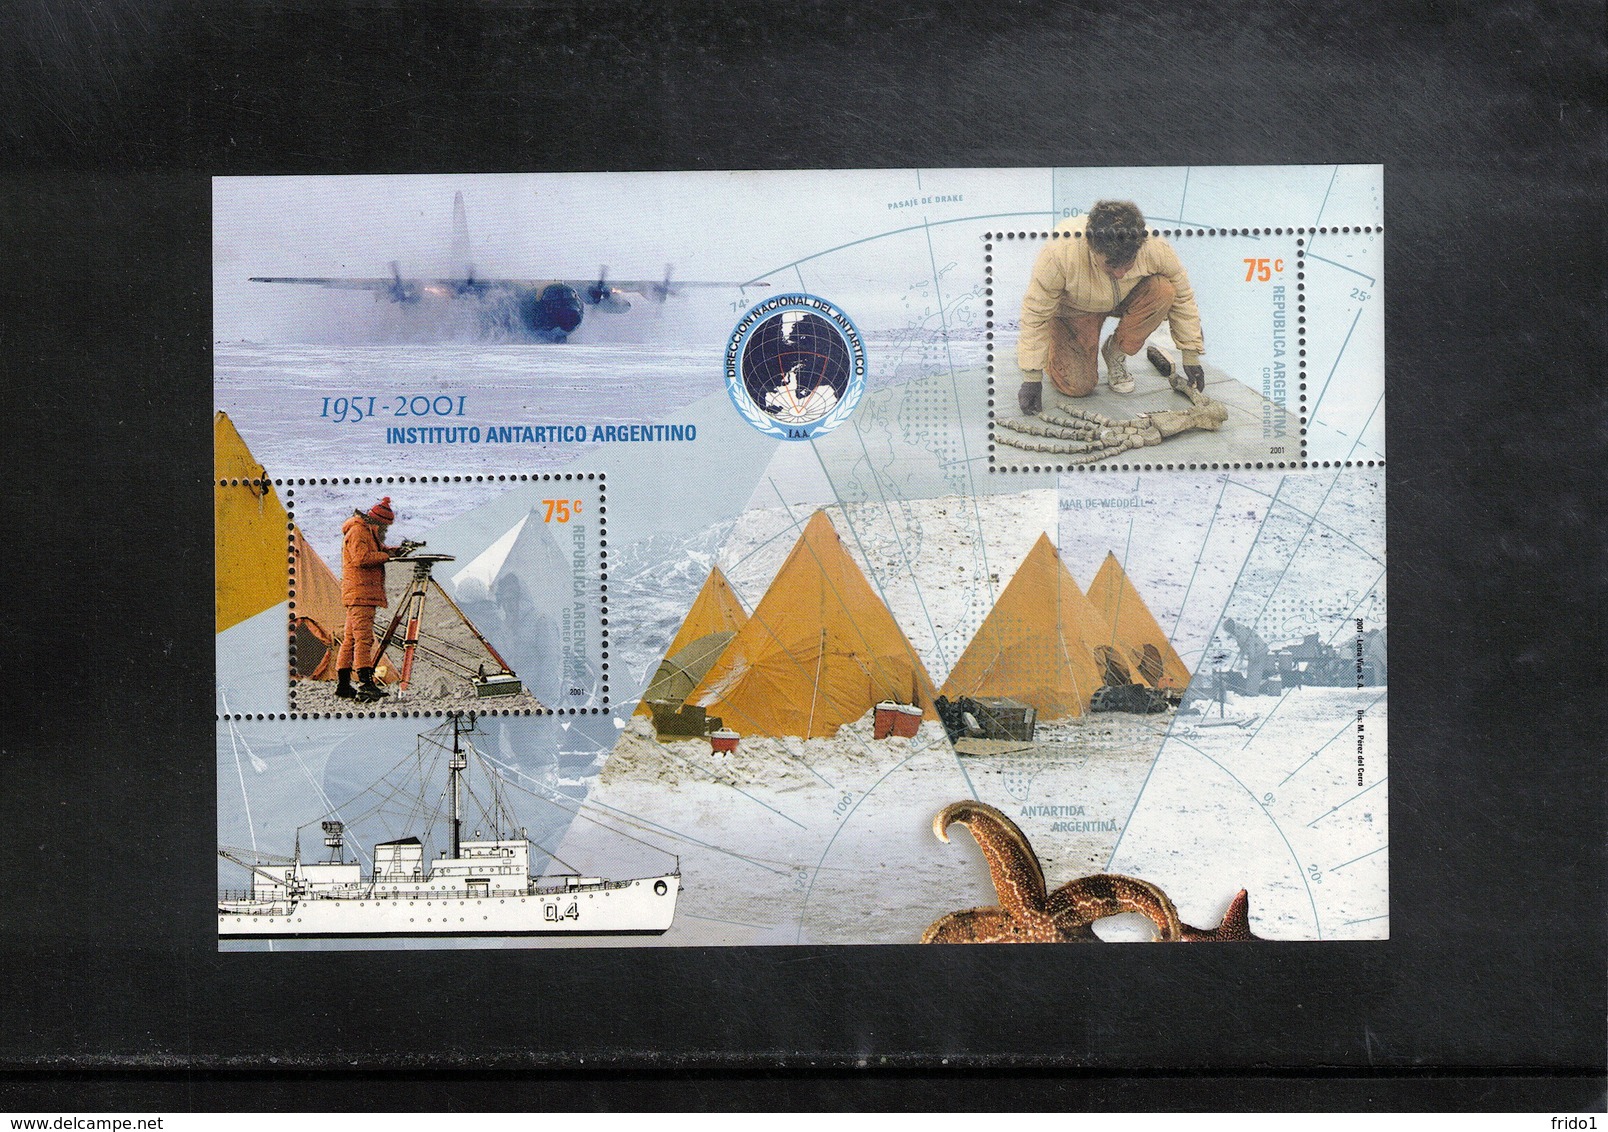 Argentina 2001 50 Years Of Argentinian Antarctic Institute Block Postfrisch / MNH - Programmi Di Ricerca